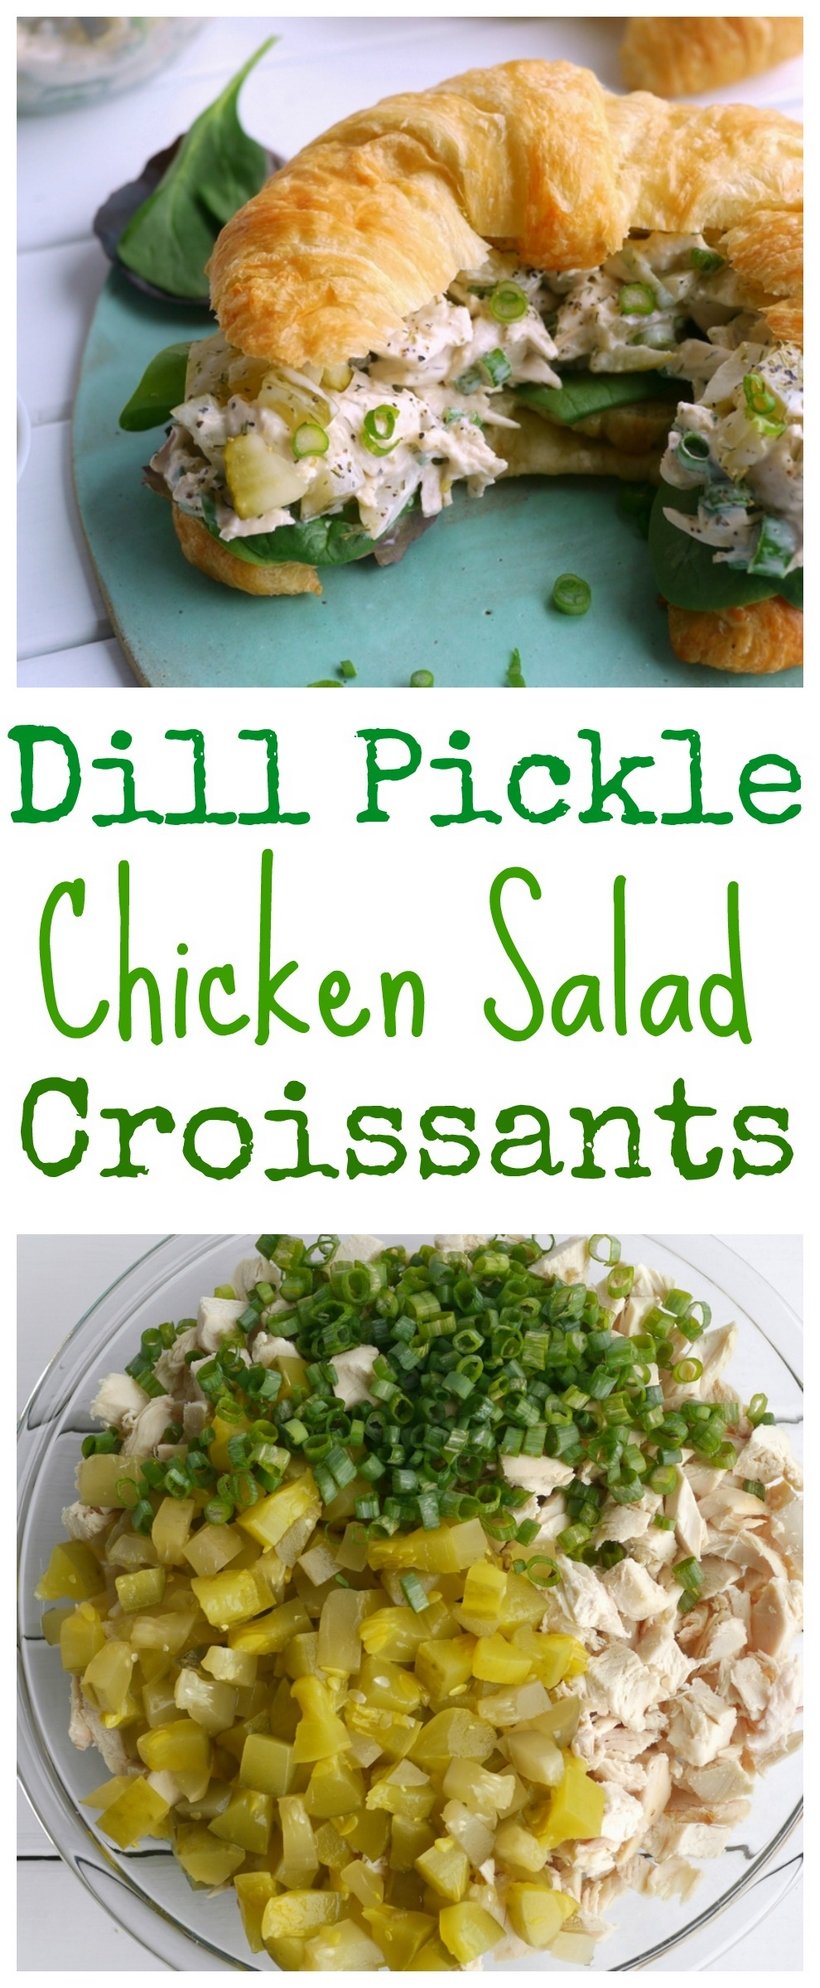 Dill Pickle Chicken Salad Croissants 